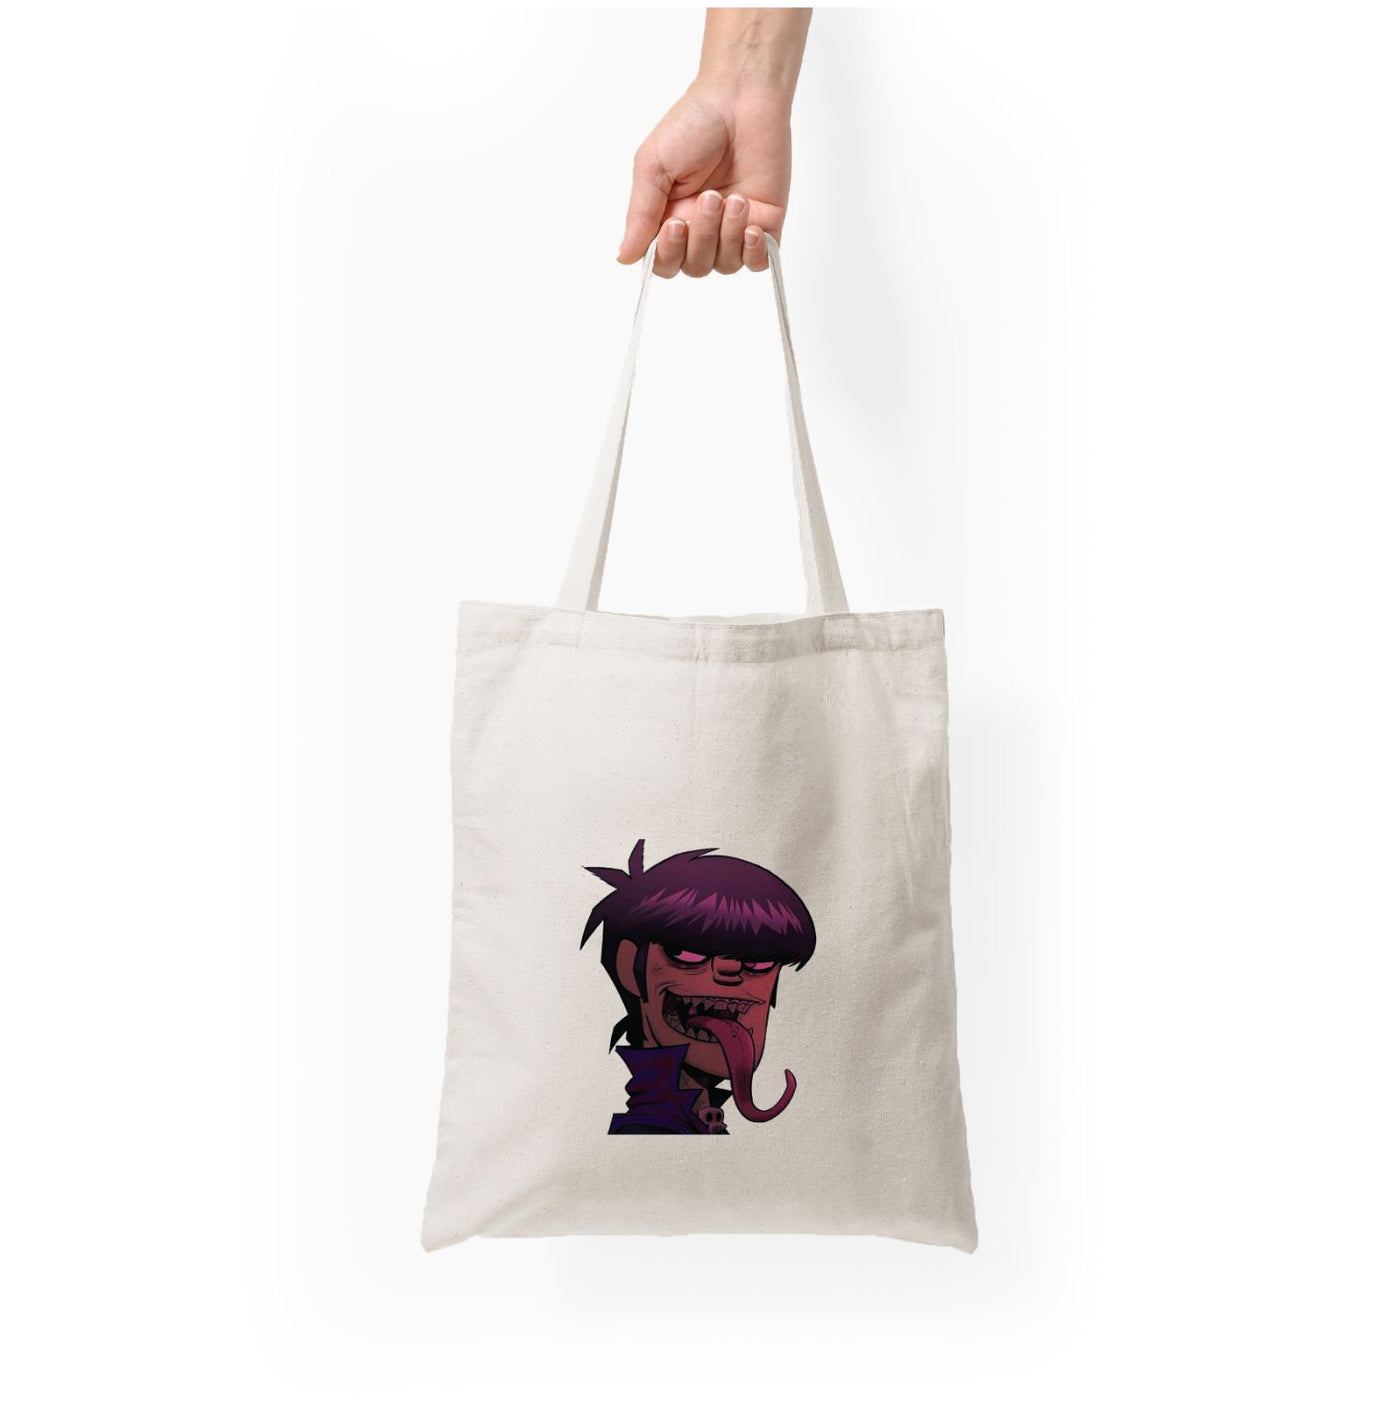 Member - Gorillaz Tote Bag